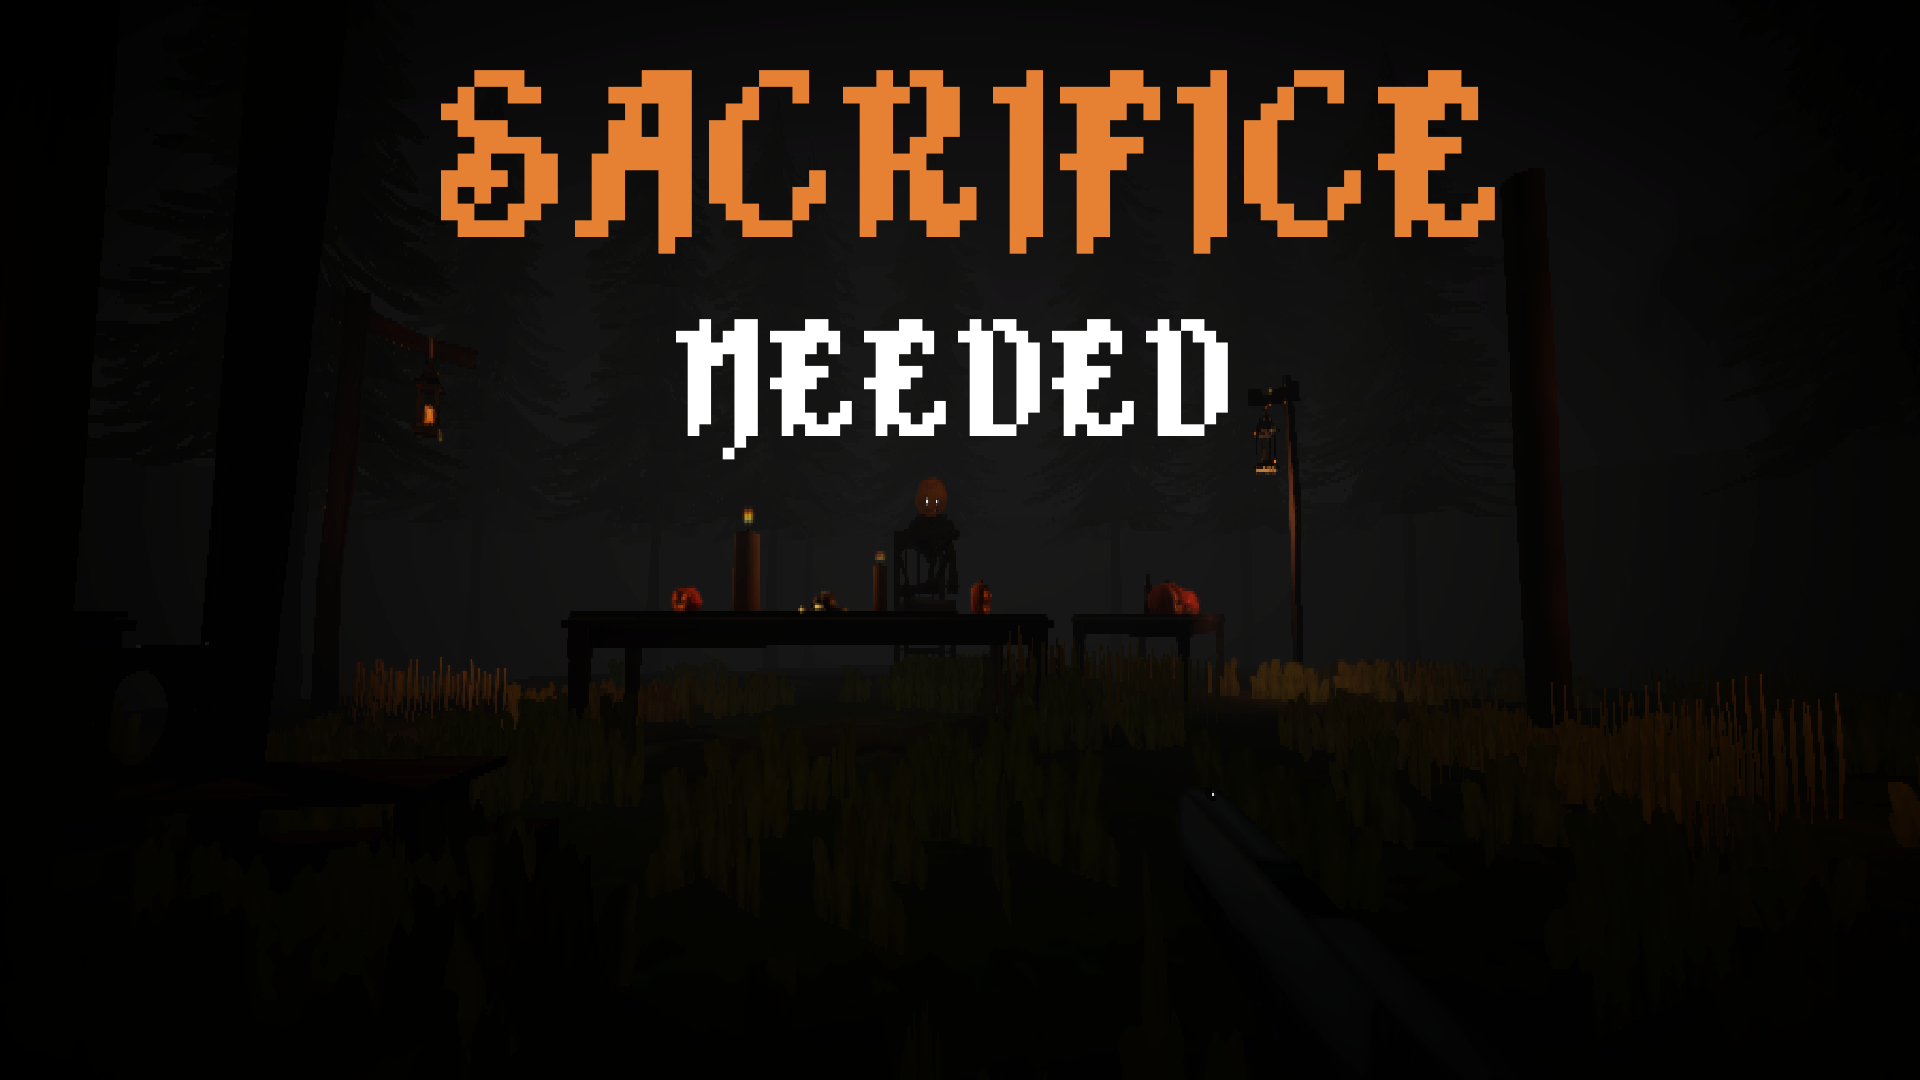 Sacrifice Needed